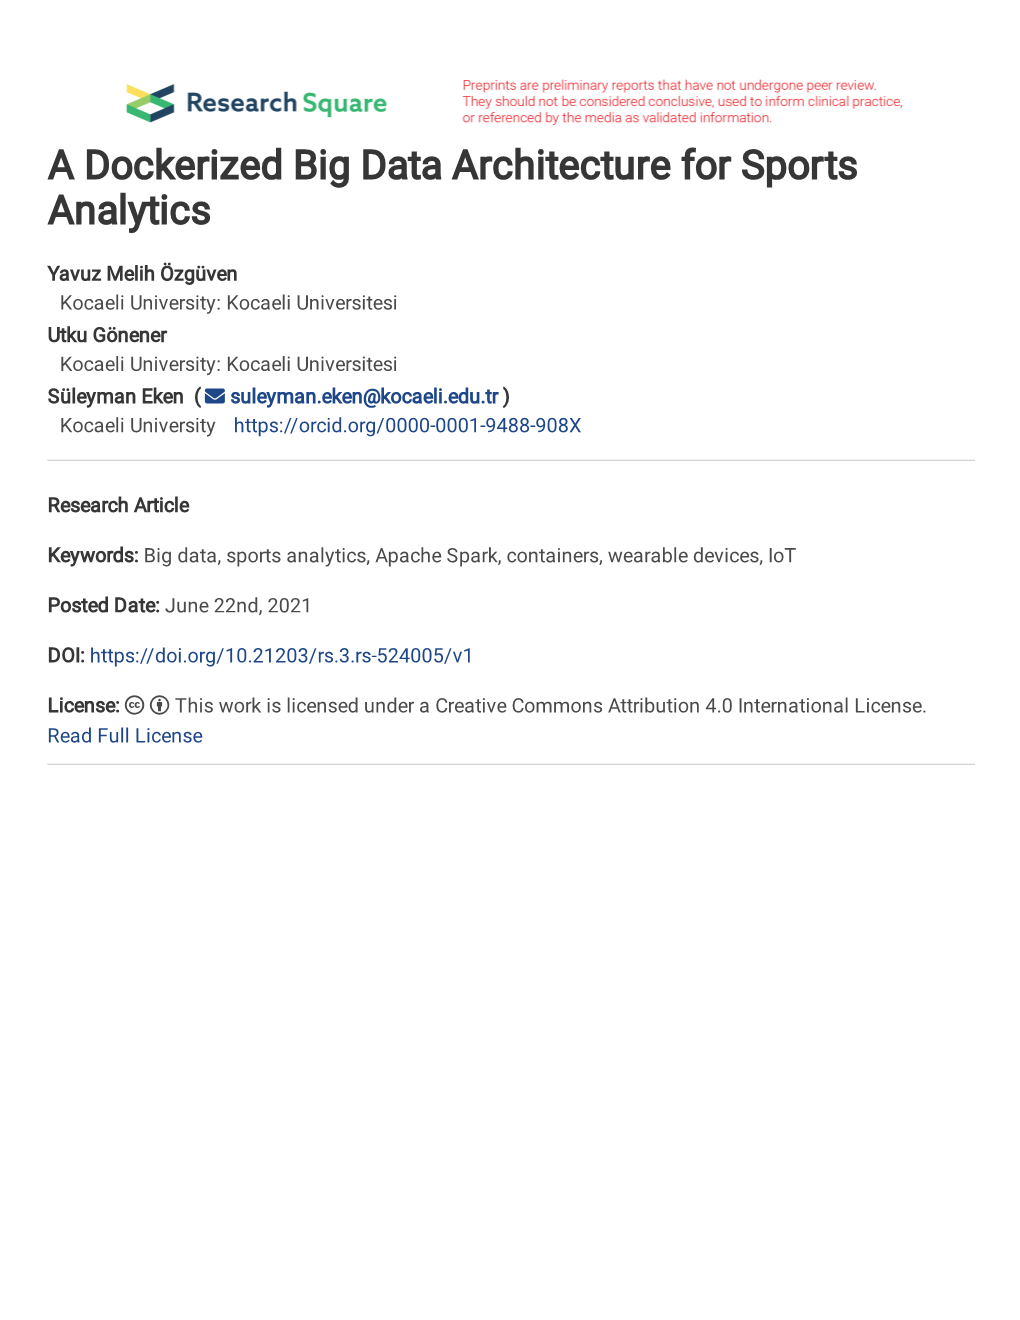 A Dockerized Big Data Architecture for Sports Analytics